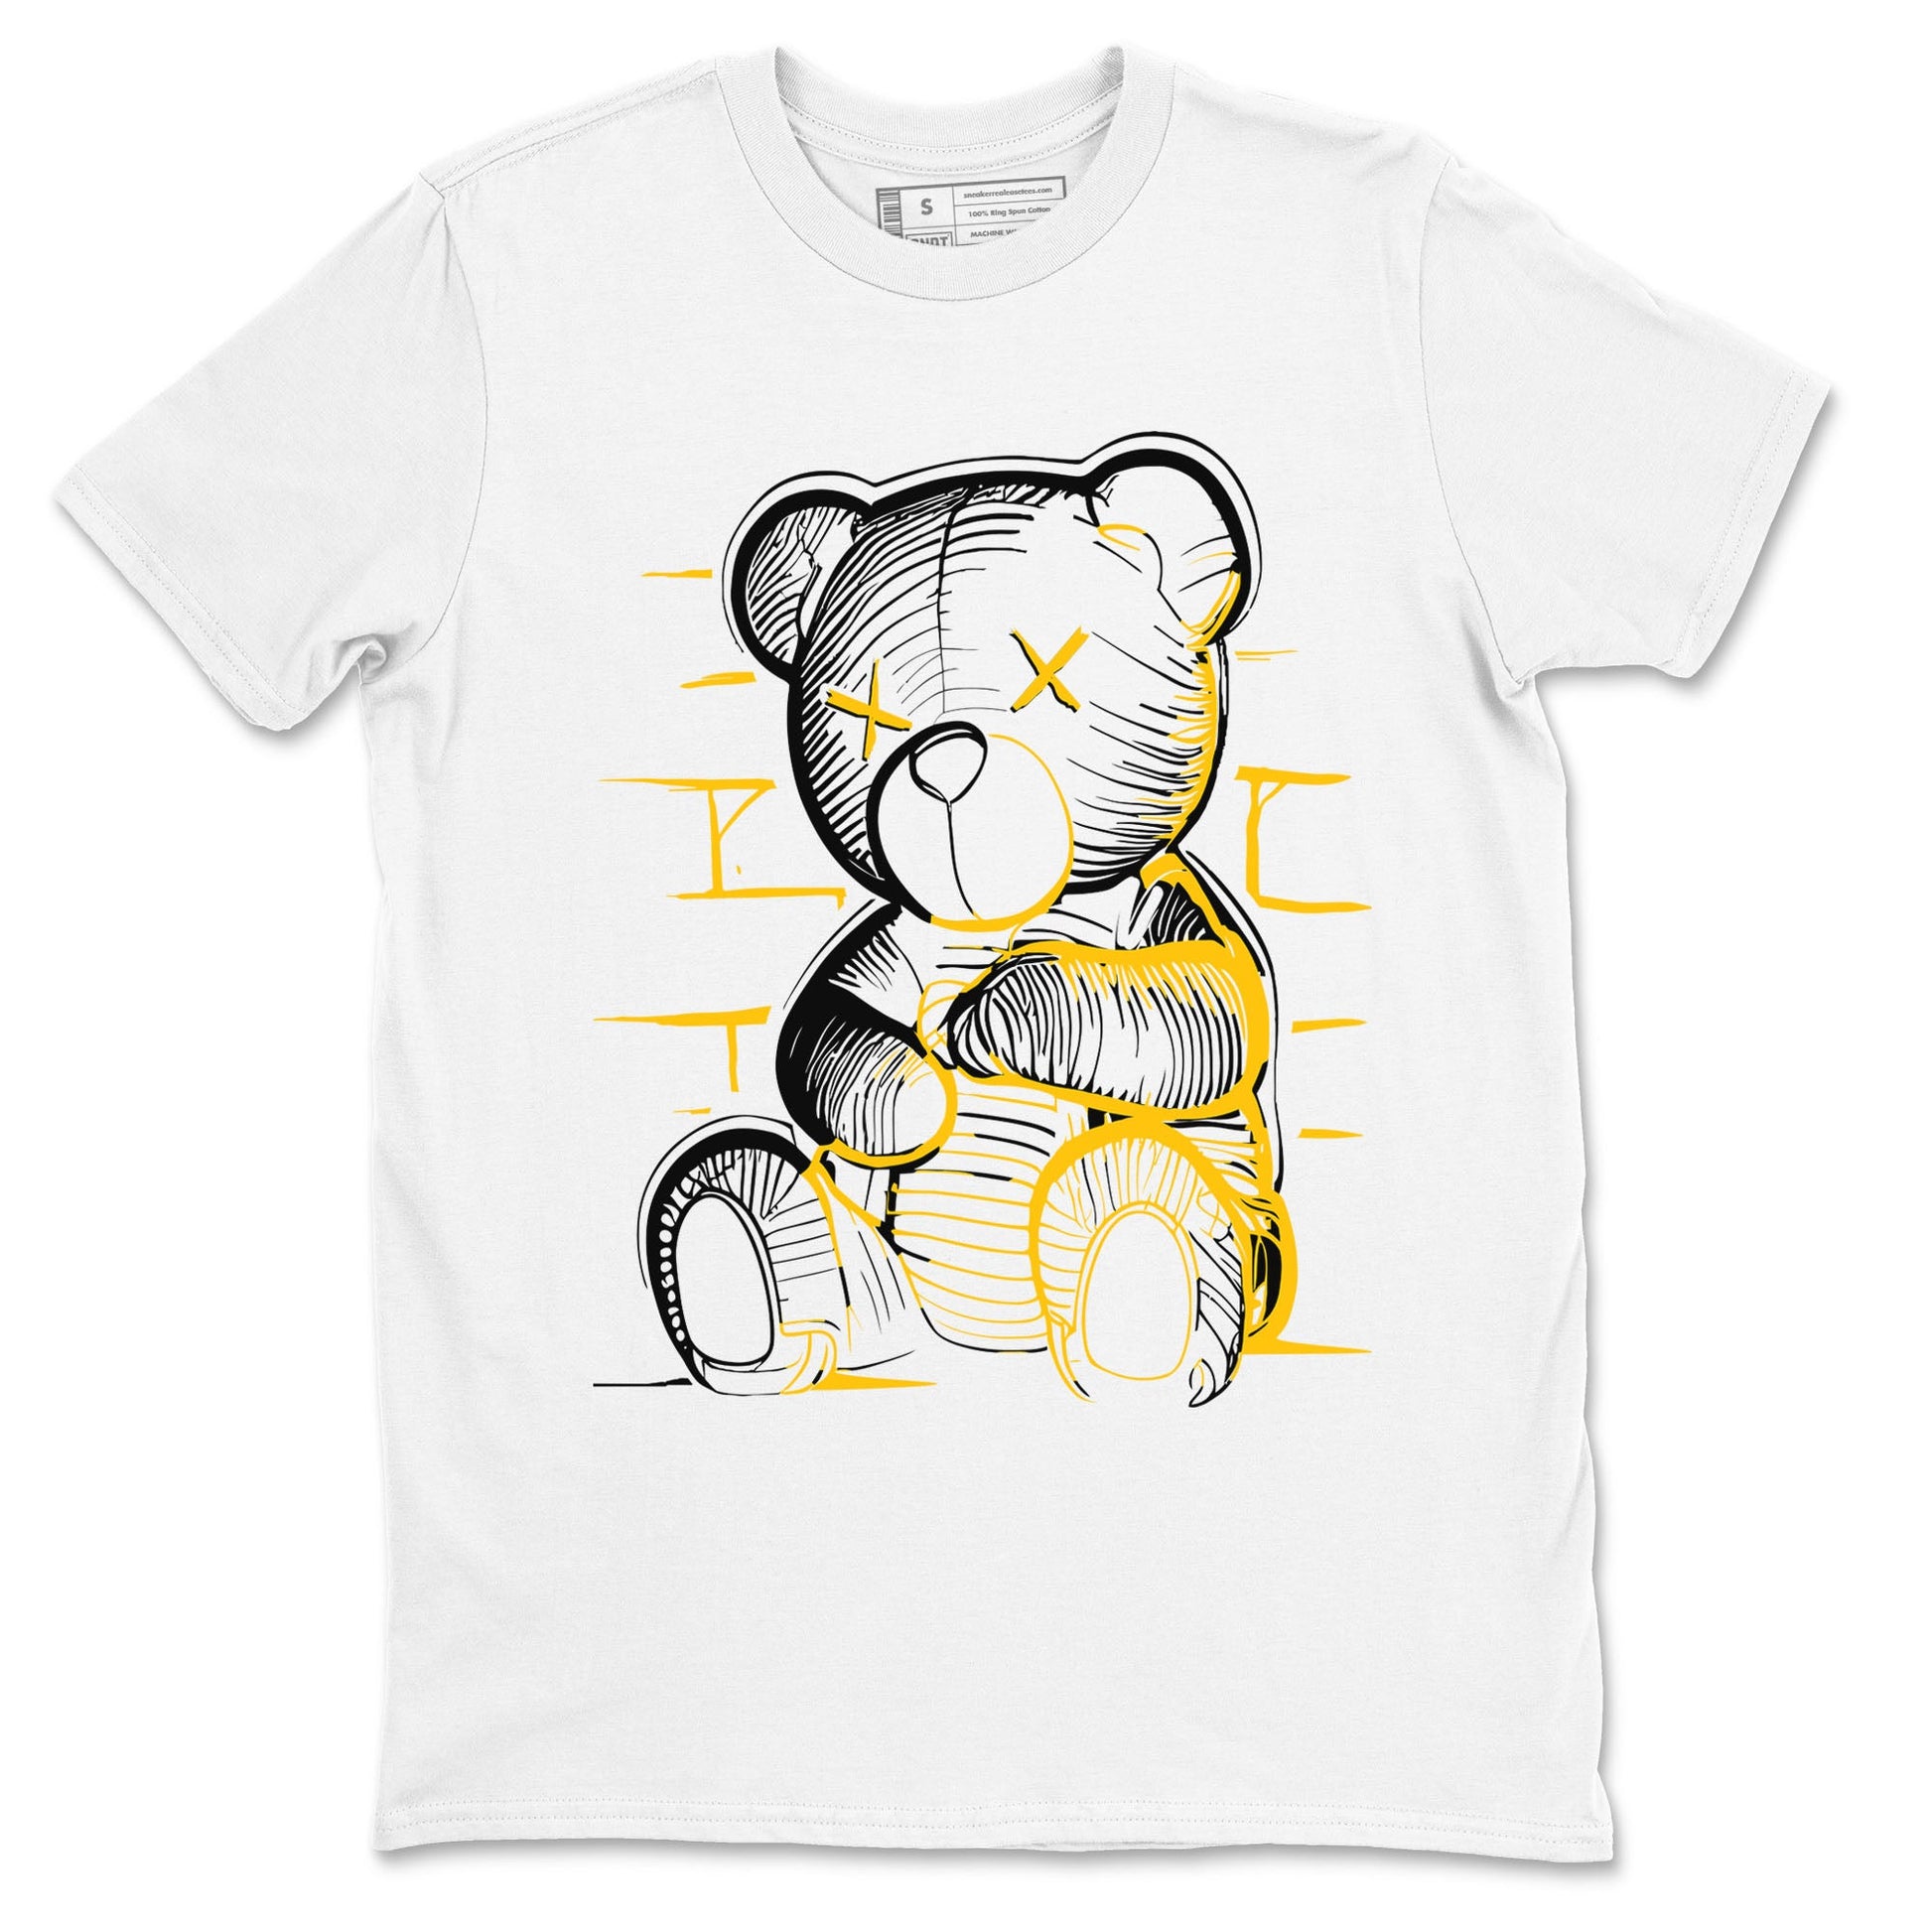 Neon Bear sneaker match tees to Yellow Ochre 6s street fashion brand for shirts to match Jordans SNRT Sneaker Tees Air Jordan 6 Yellow Ochre unisex t-shirt White 2 unisex shirt